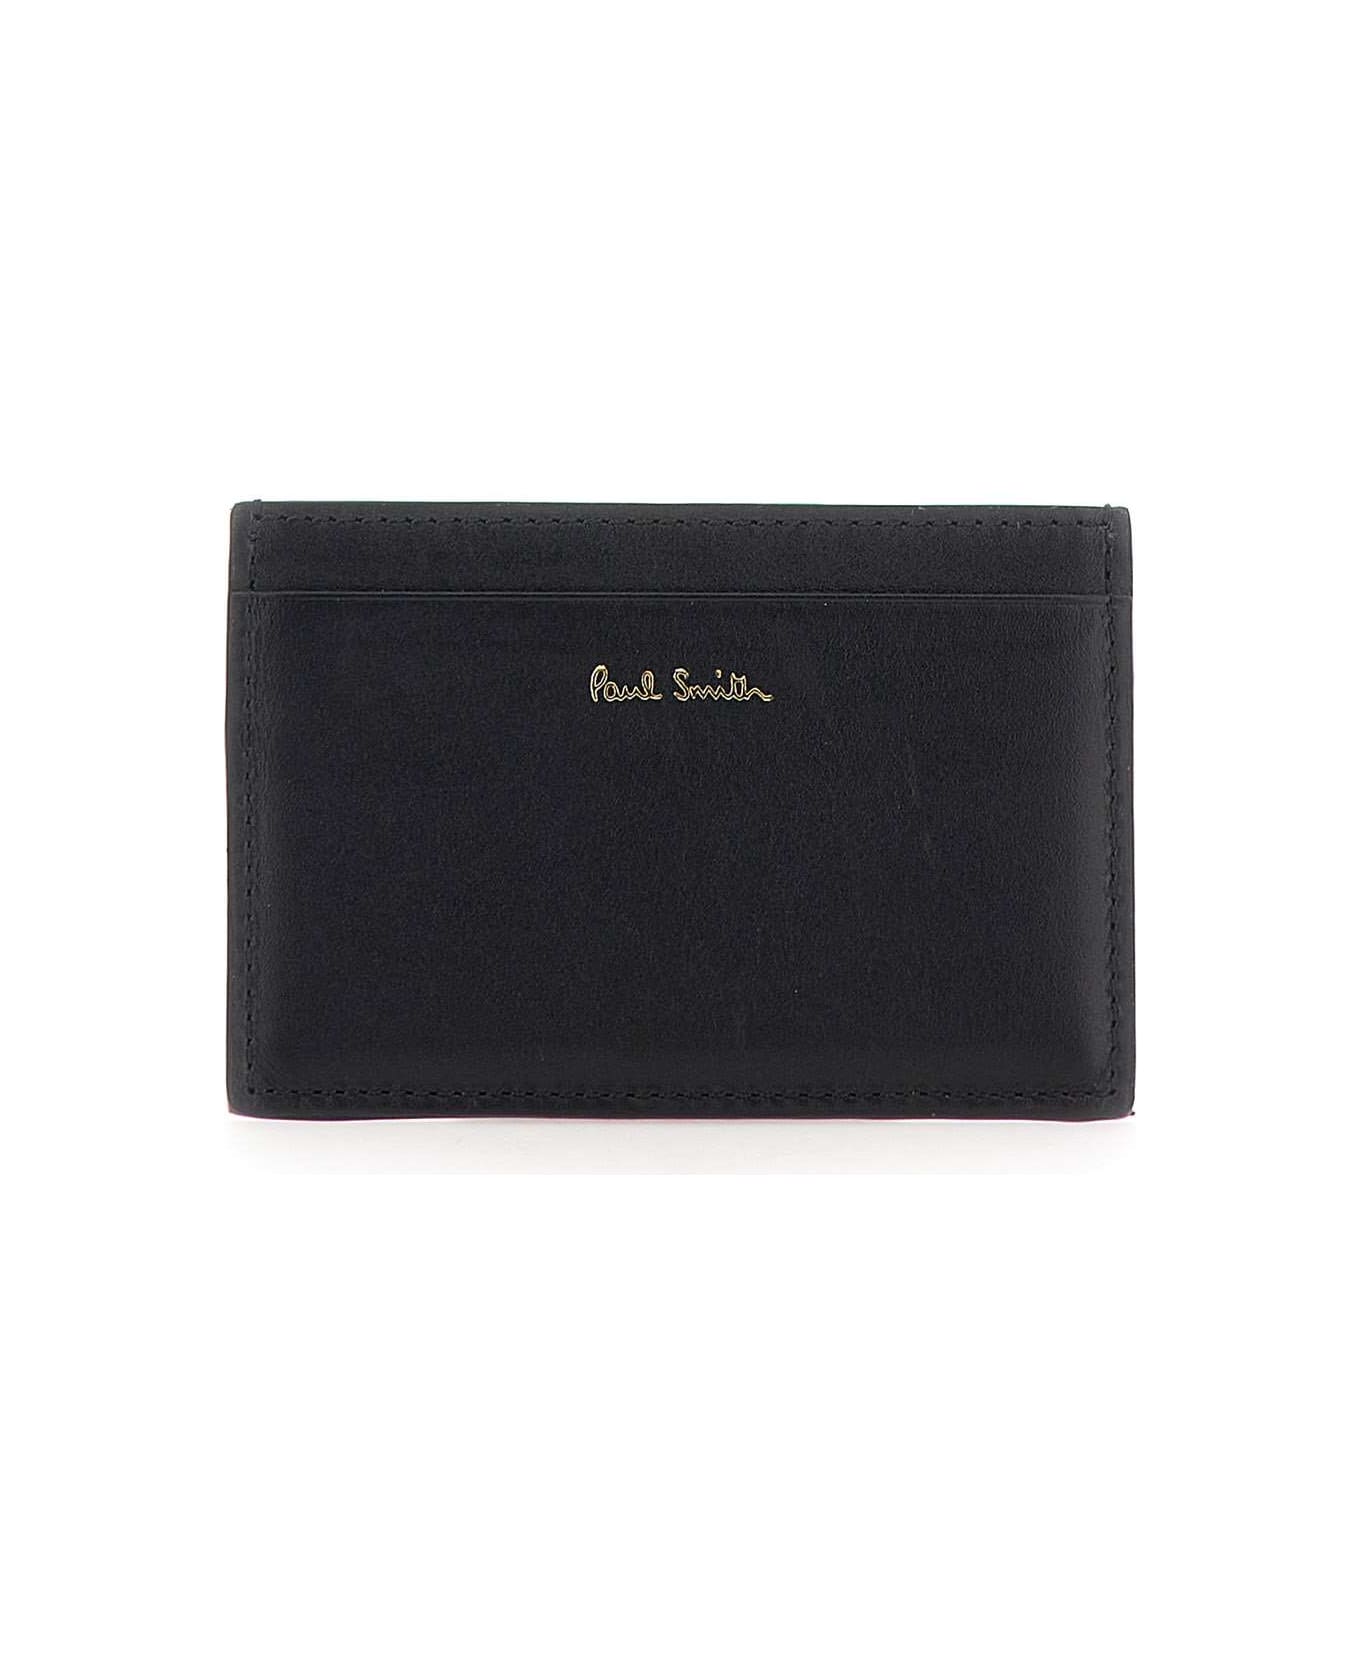 Paul Smith Card Holder Black Leather Wallet - BLACK